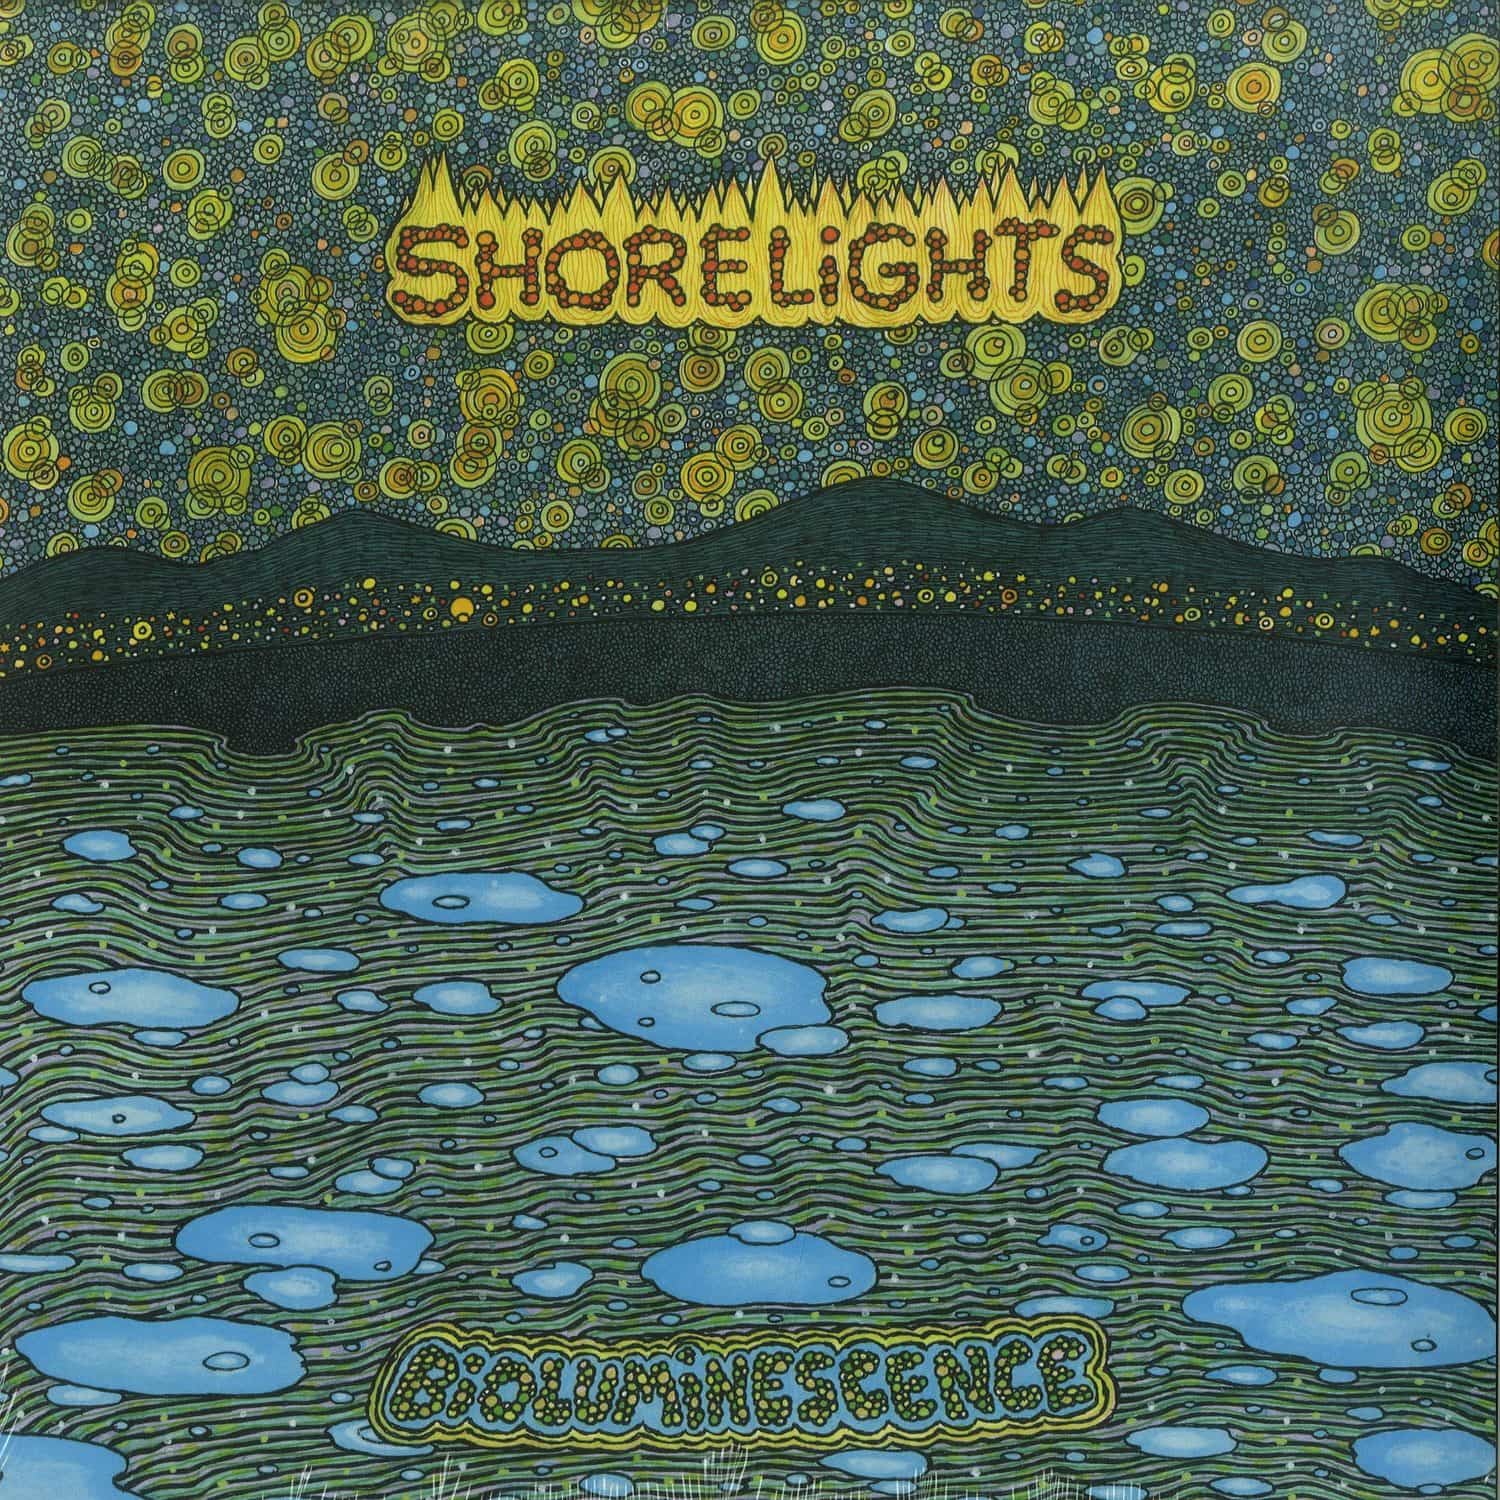 Shorelights - BIOLUMINESCENCE 